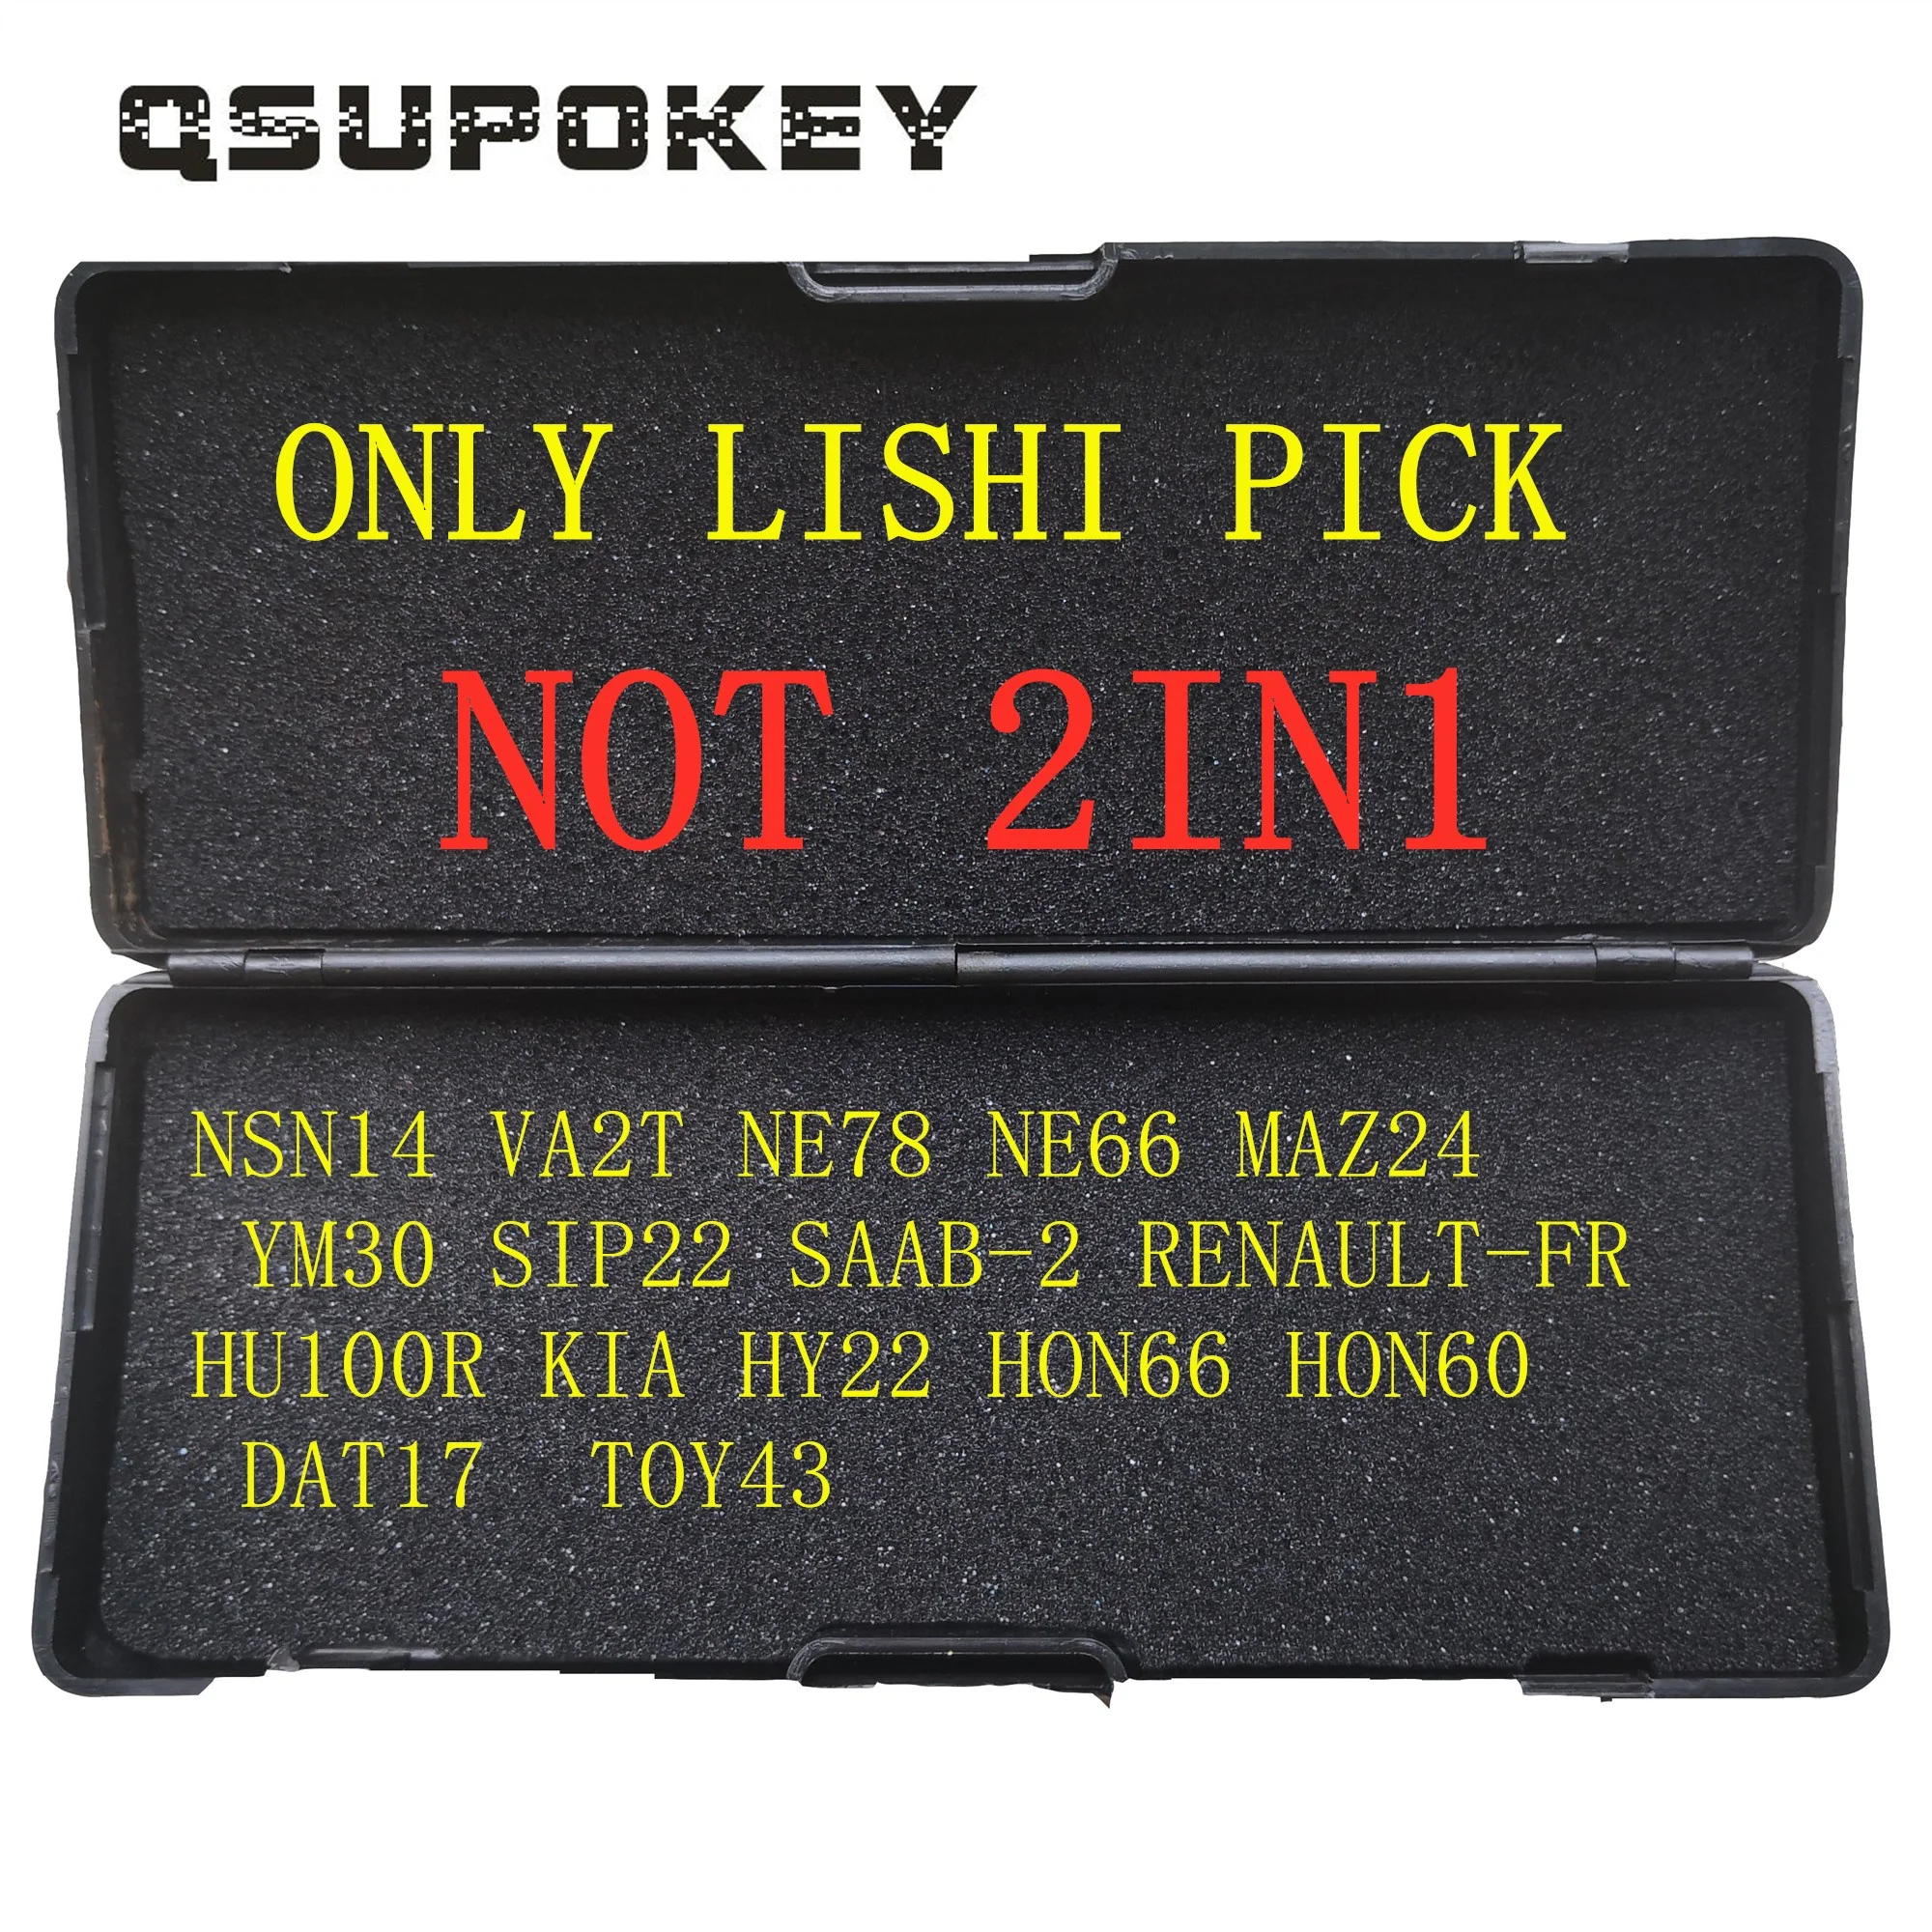 

QSUPOKEY Genuine LiShi repair Tool Locksmith Tools VA2T NE78 NE66 MAZ24 SIP22 RENAULT HU100 HU66 for Car/Auto(not 2in1)